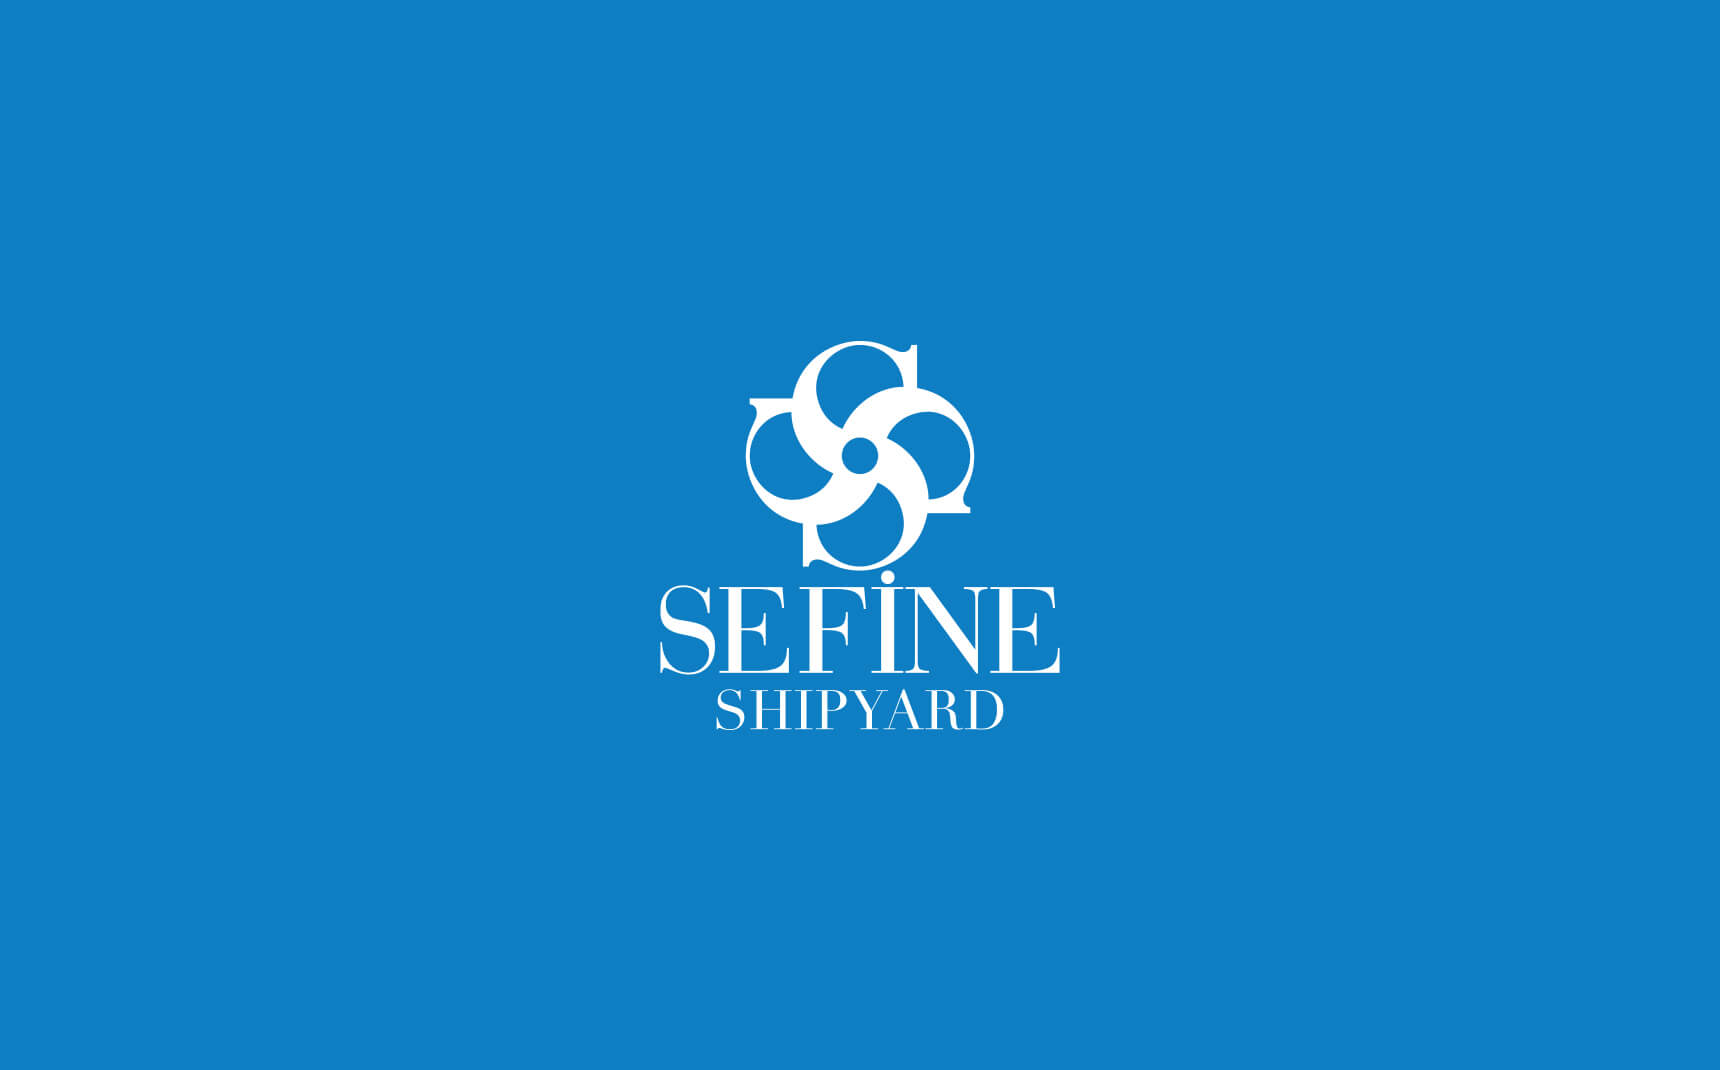 Sefine Shipyard-metin 1-6- ilham-metin 2-7- kurumsal giris-8- amblem-kurumsal-9- logo